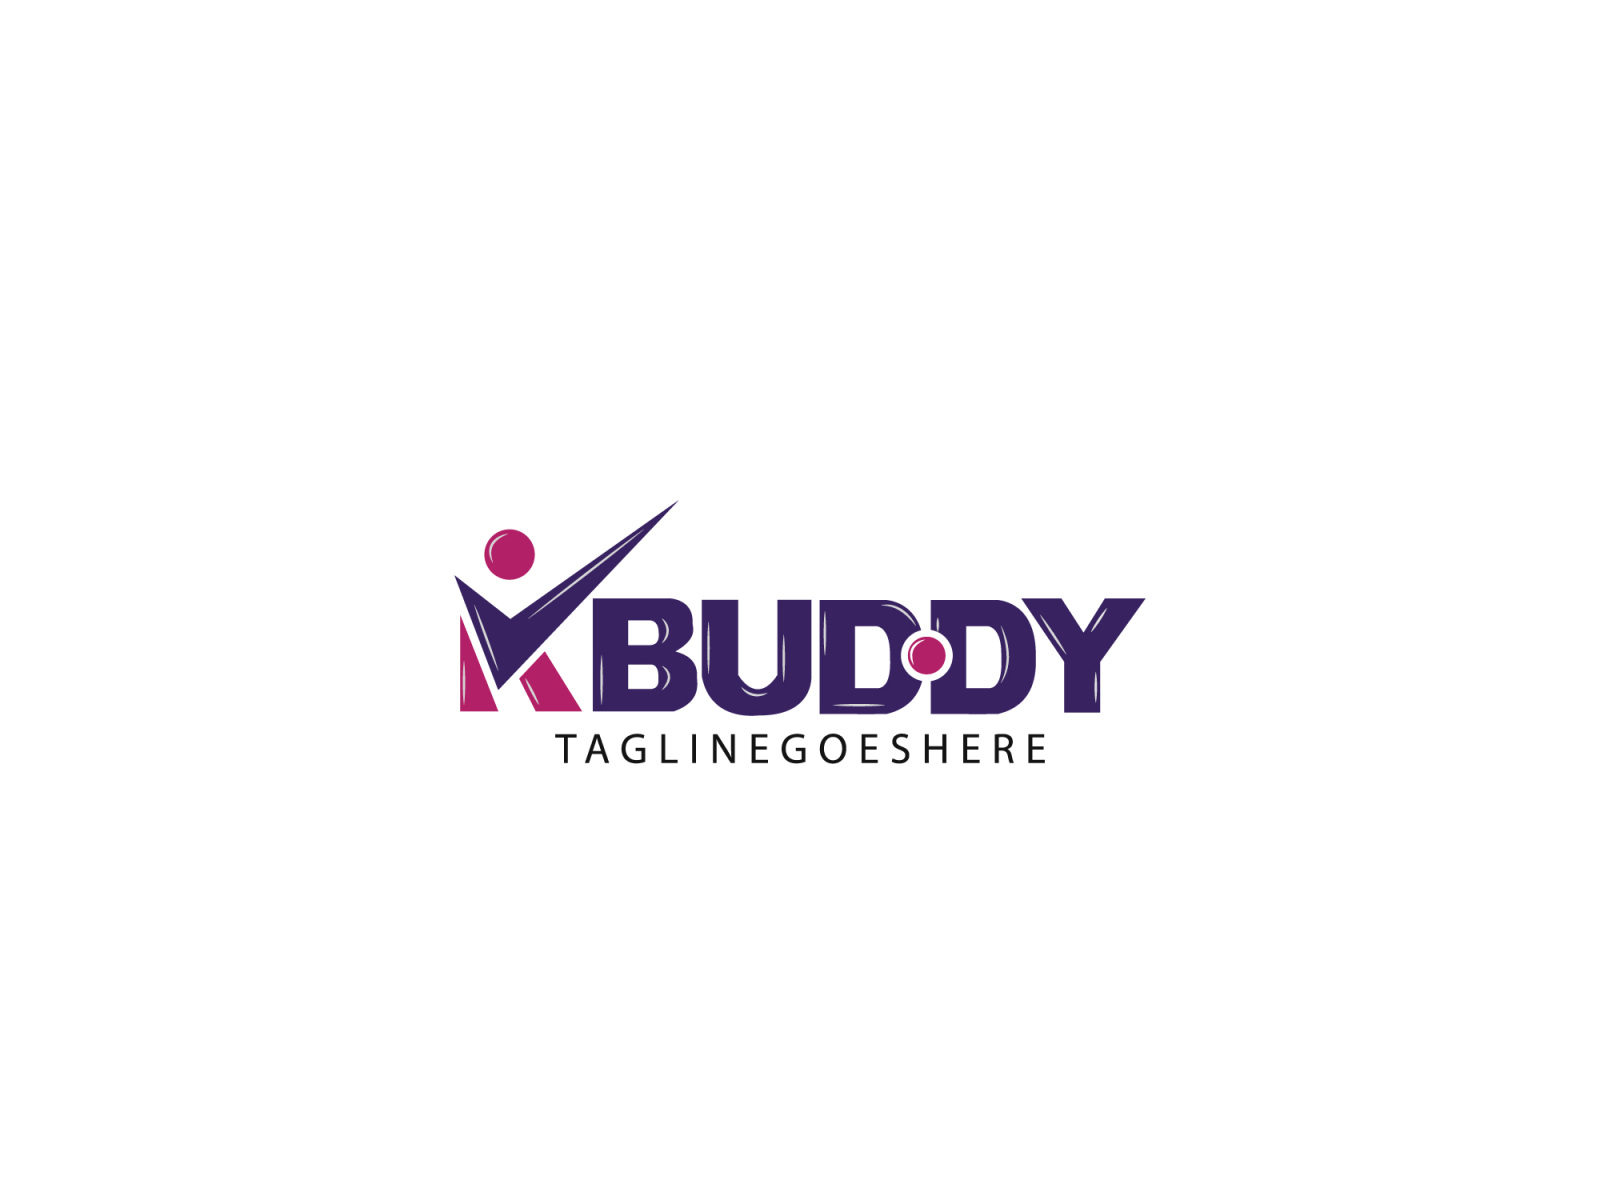 Bad Buddy logo